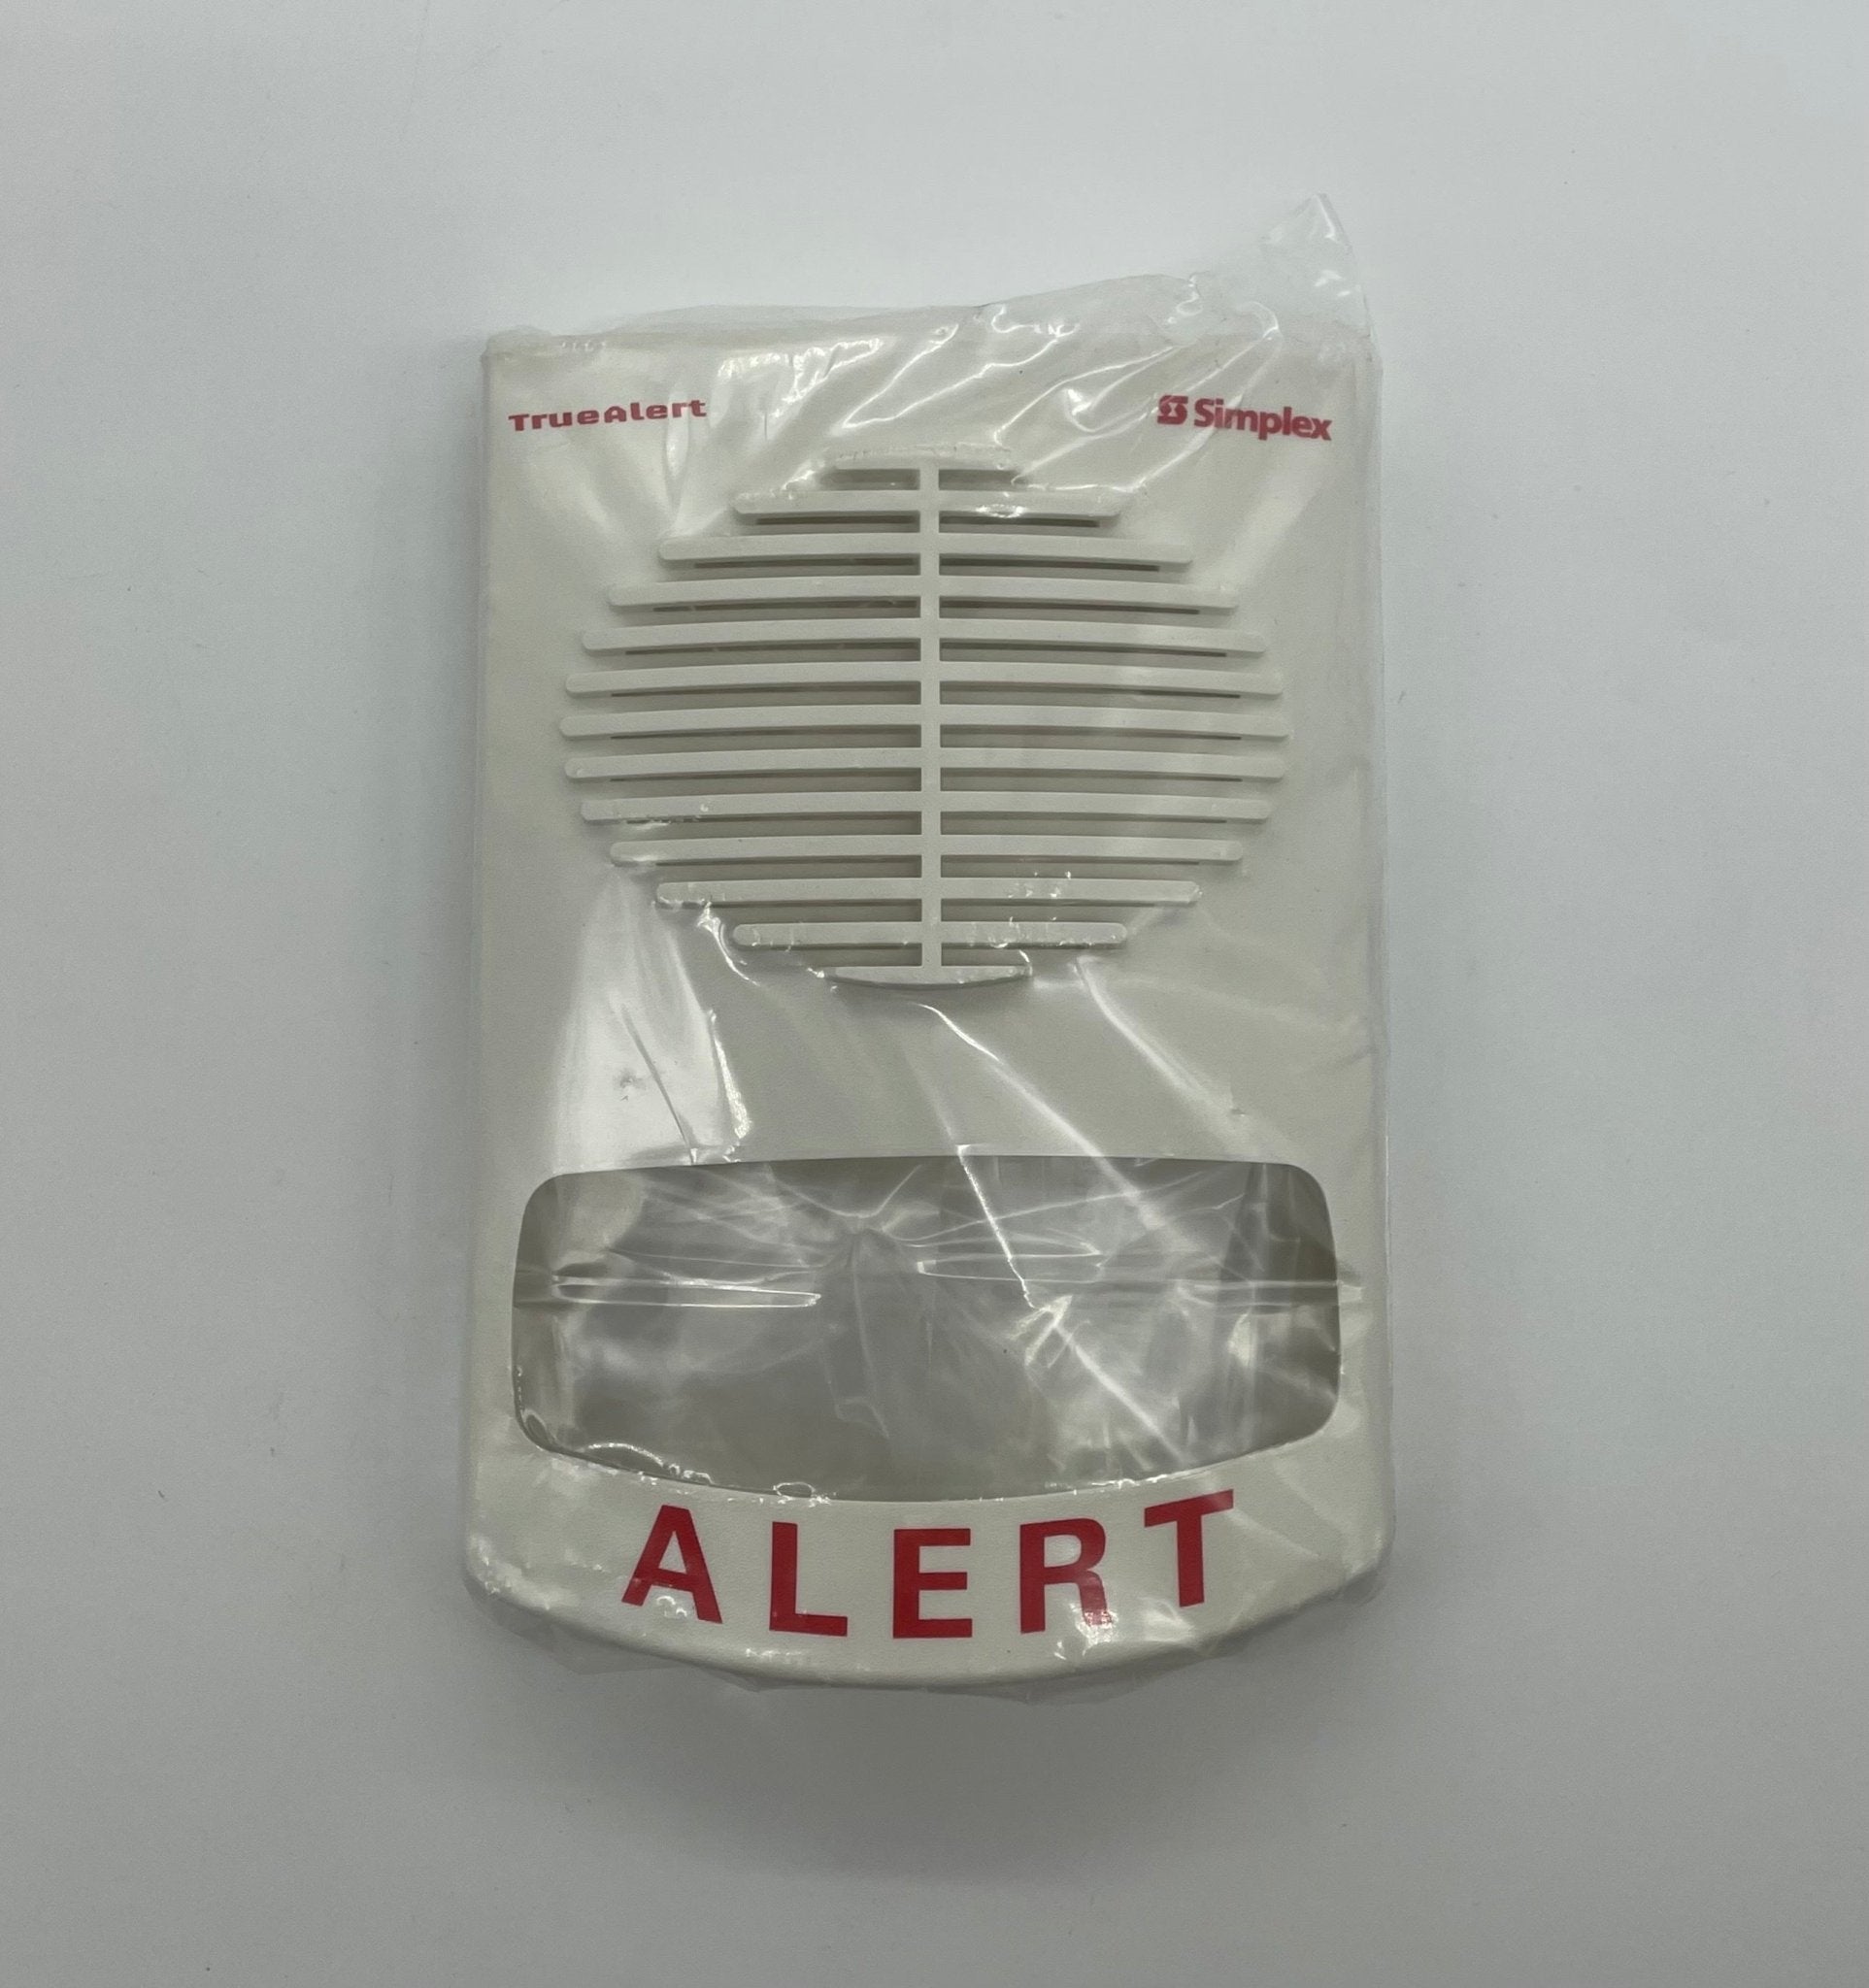 Simplex 4905-9846 - The Fire Alarm Supplier